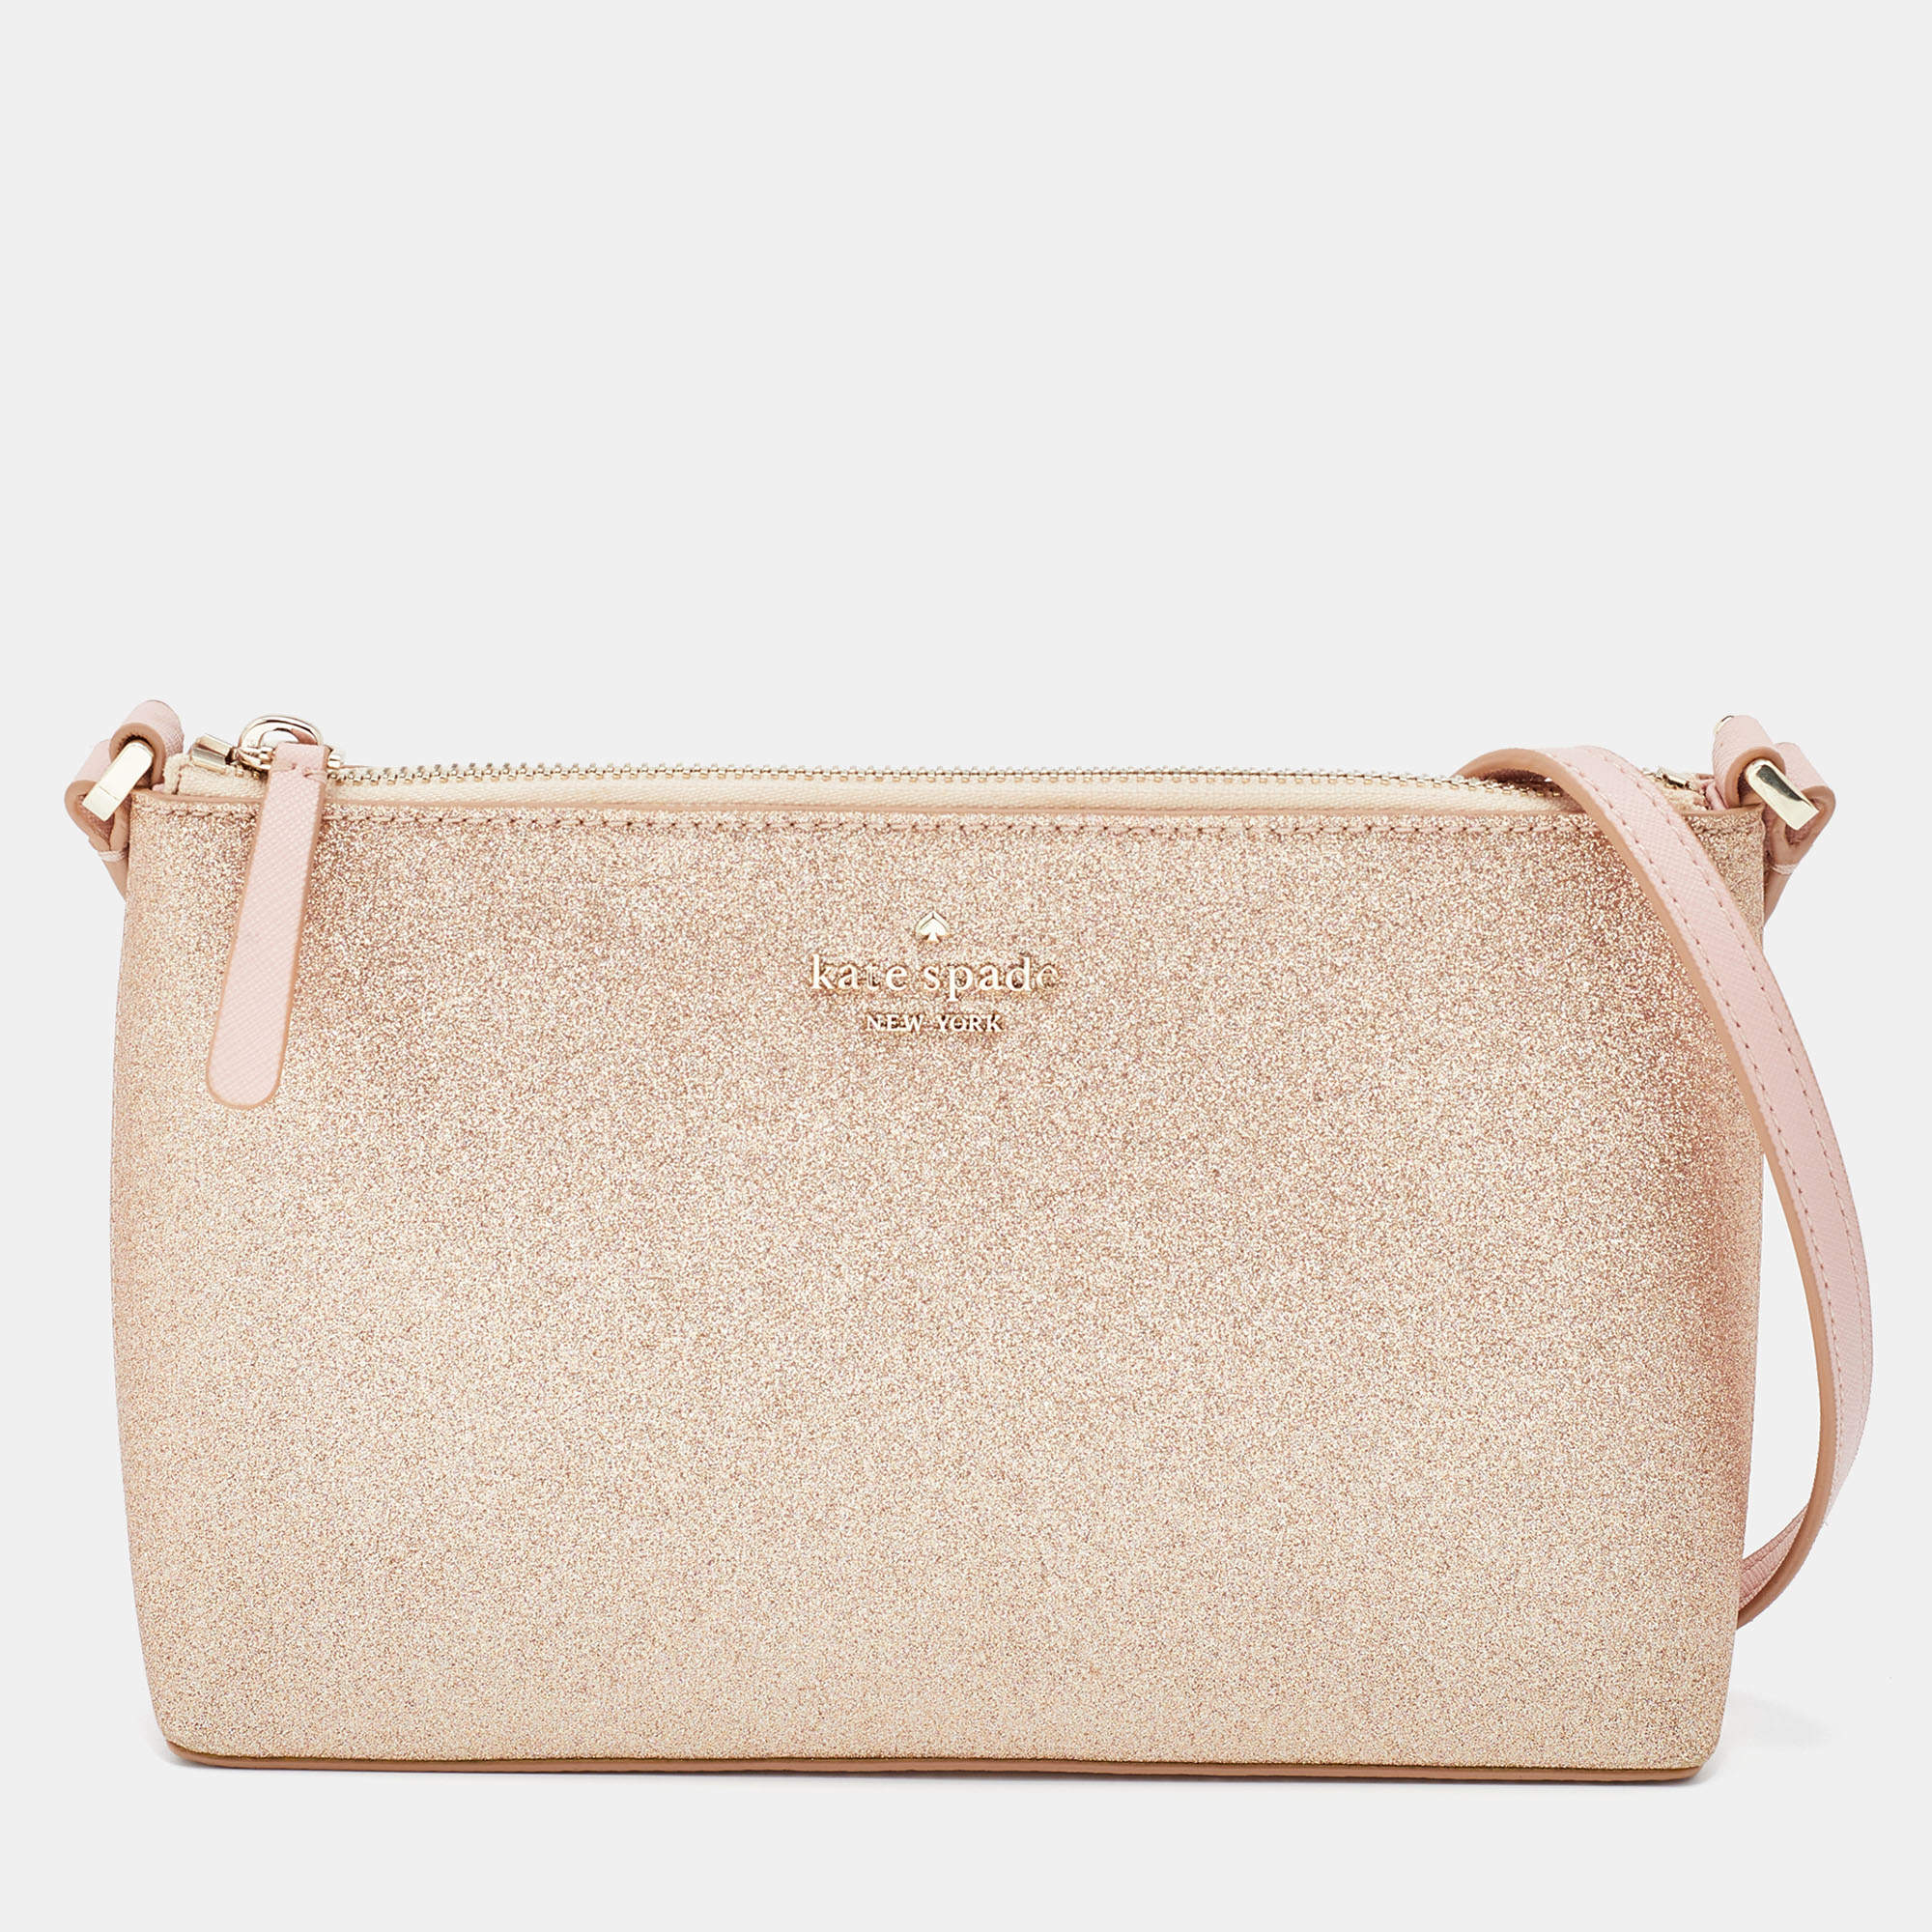 Kate Spade New York Shimmy Glitter Medium Phone Flap Wristlet Rose Gold:  Handbags: Amazon.com